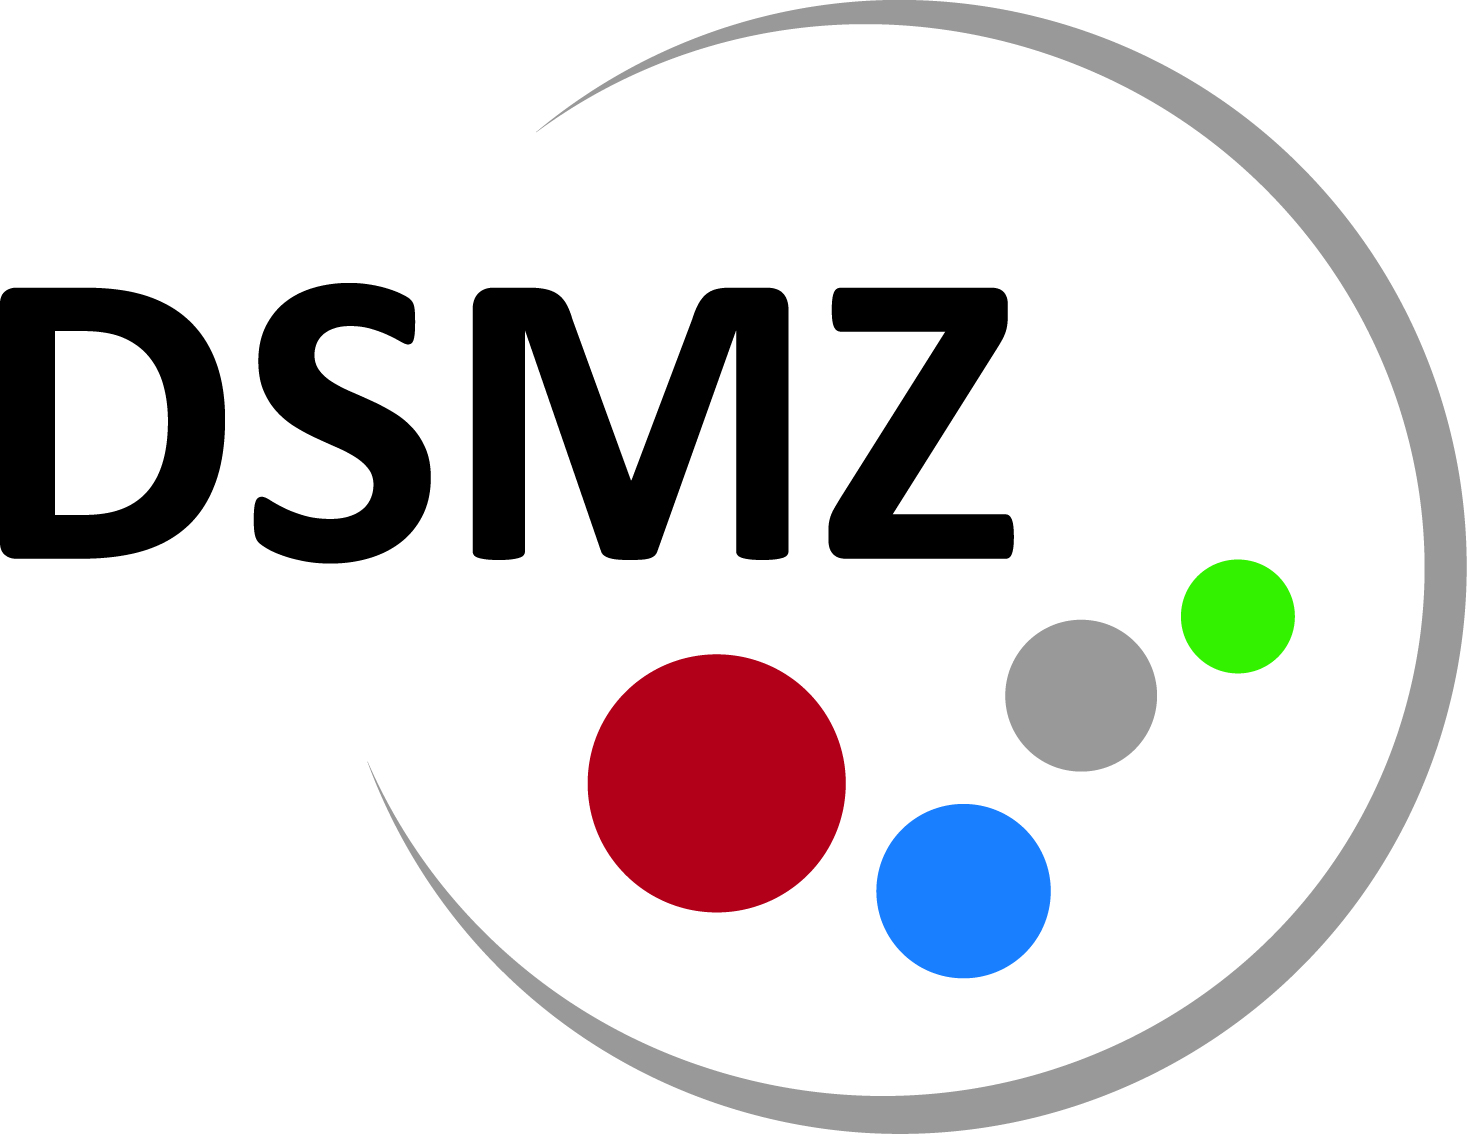 DSMZ Logo